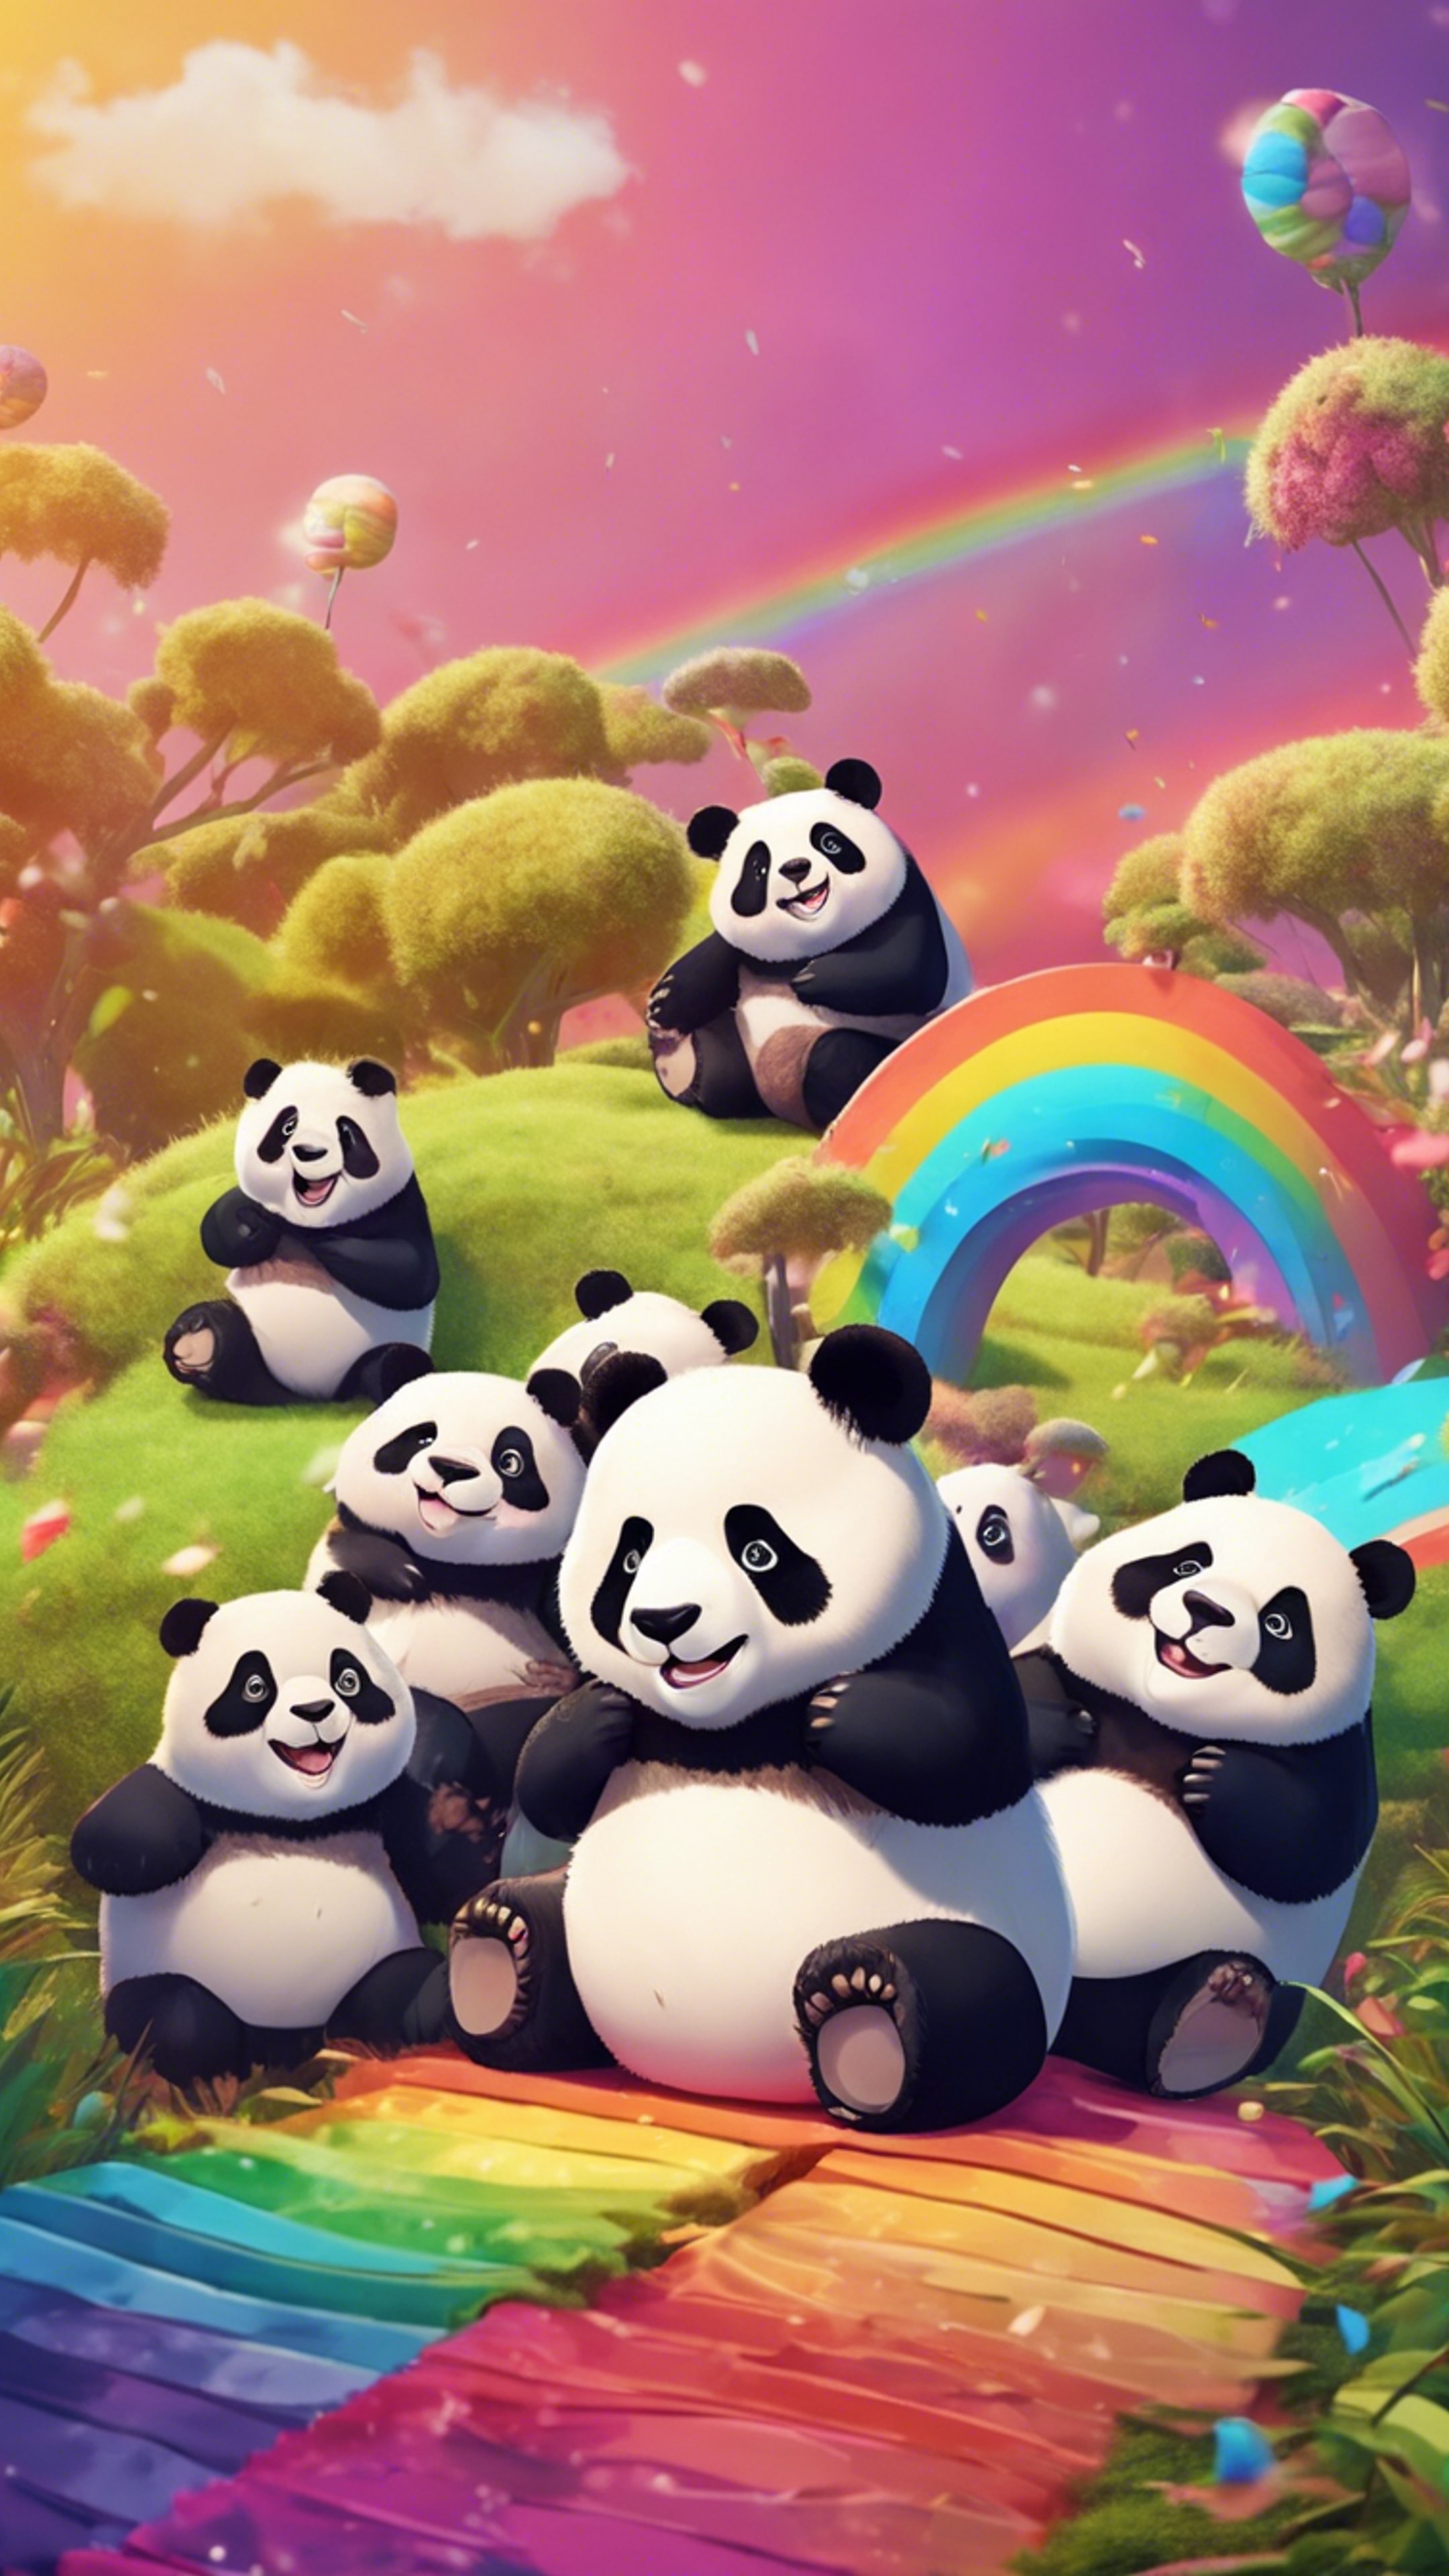 A group of chubby, adorable pandas sliding down a vibrant rainbow. Tapeta[164879d3f9f4475687c2]